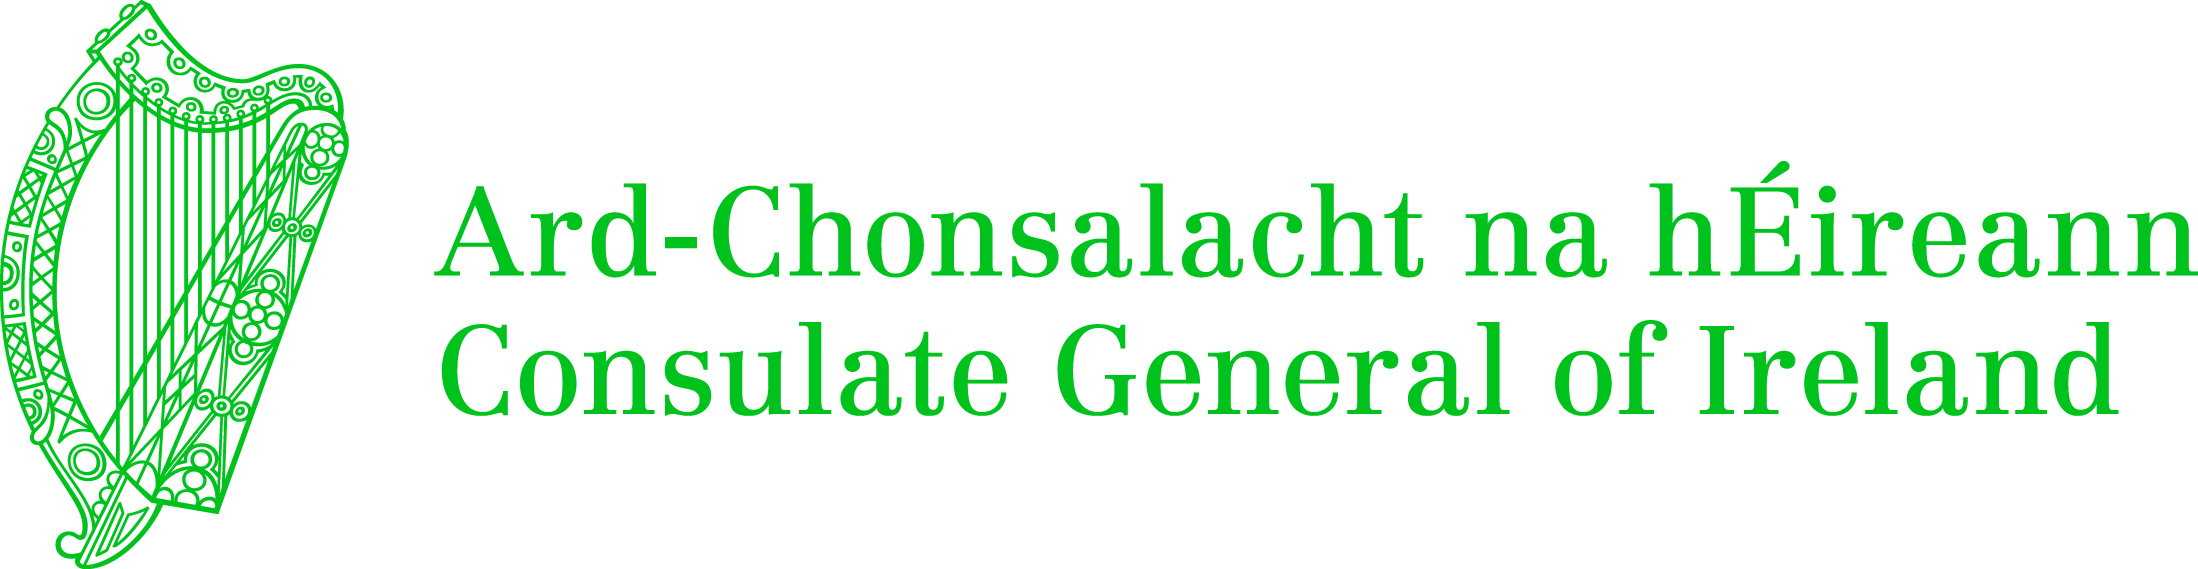 Consulate General Logo